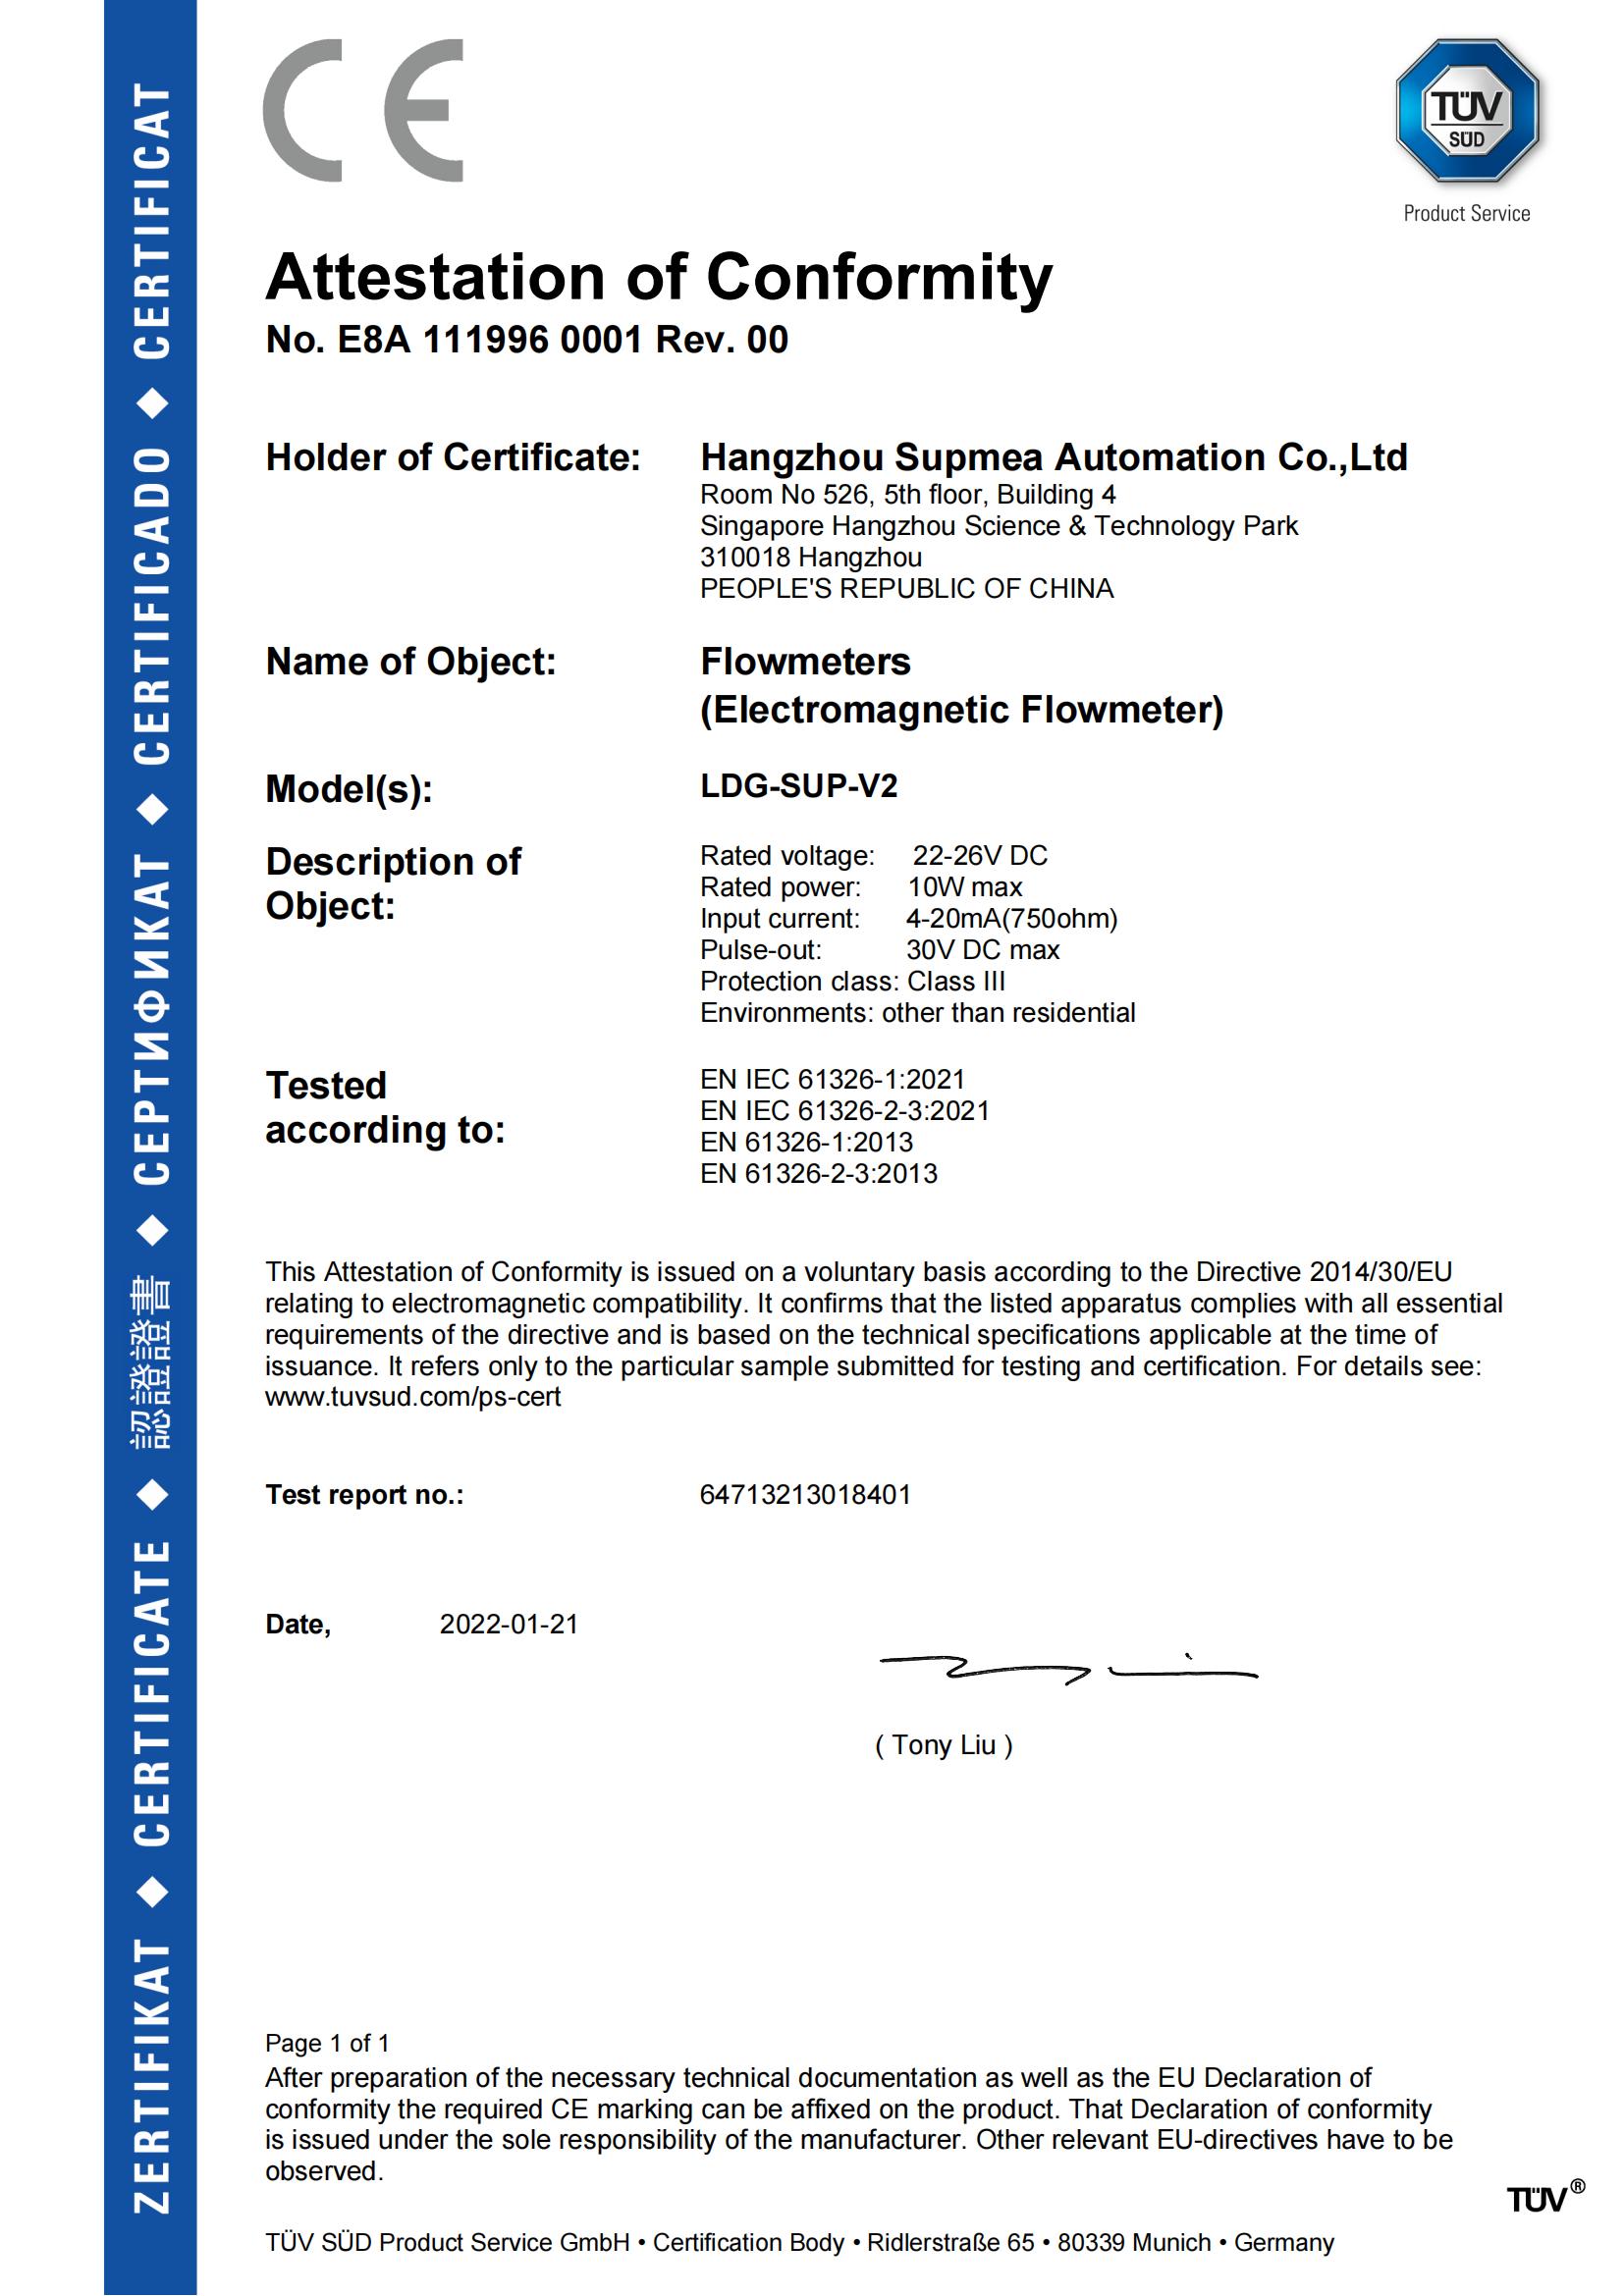 Сертификат CE (TUV) -электромагнитный расходомер